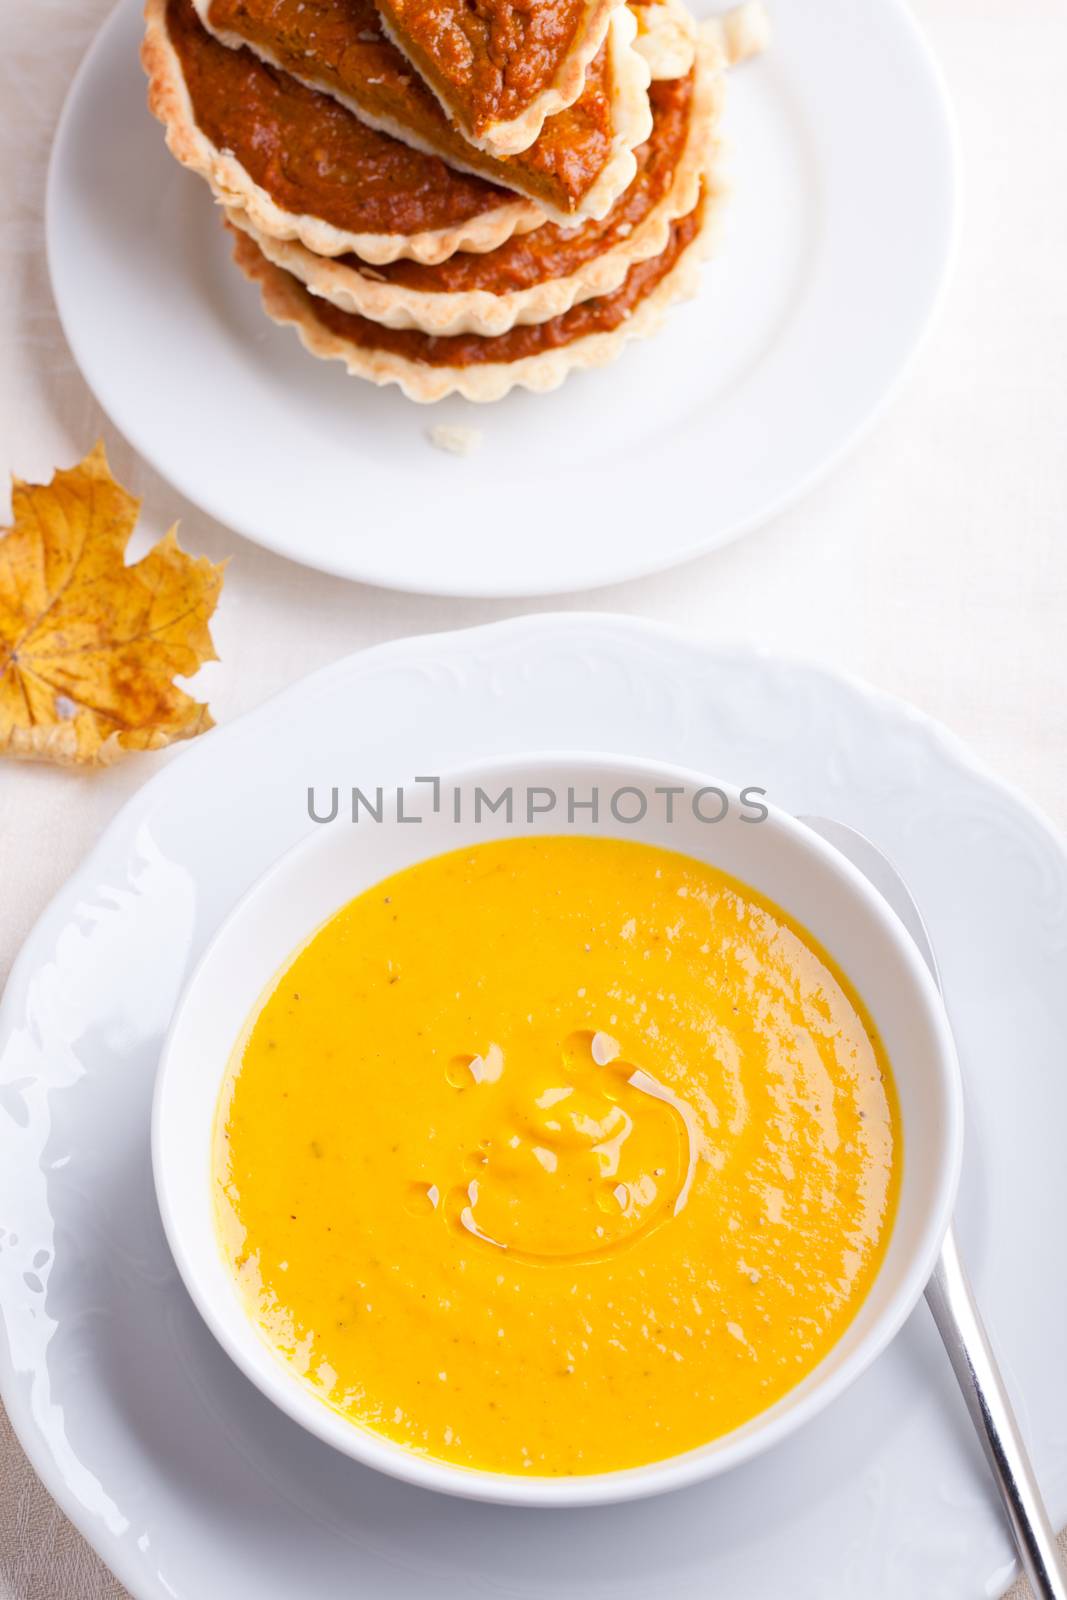 Pumpkin creme soup and pumpkin pie on a table